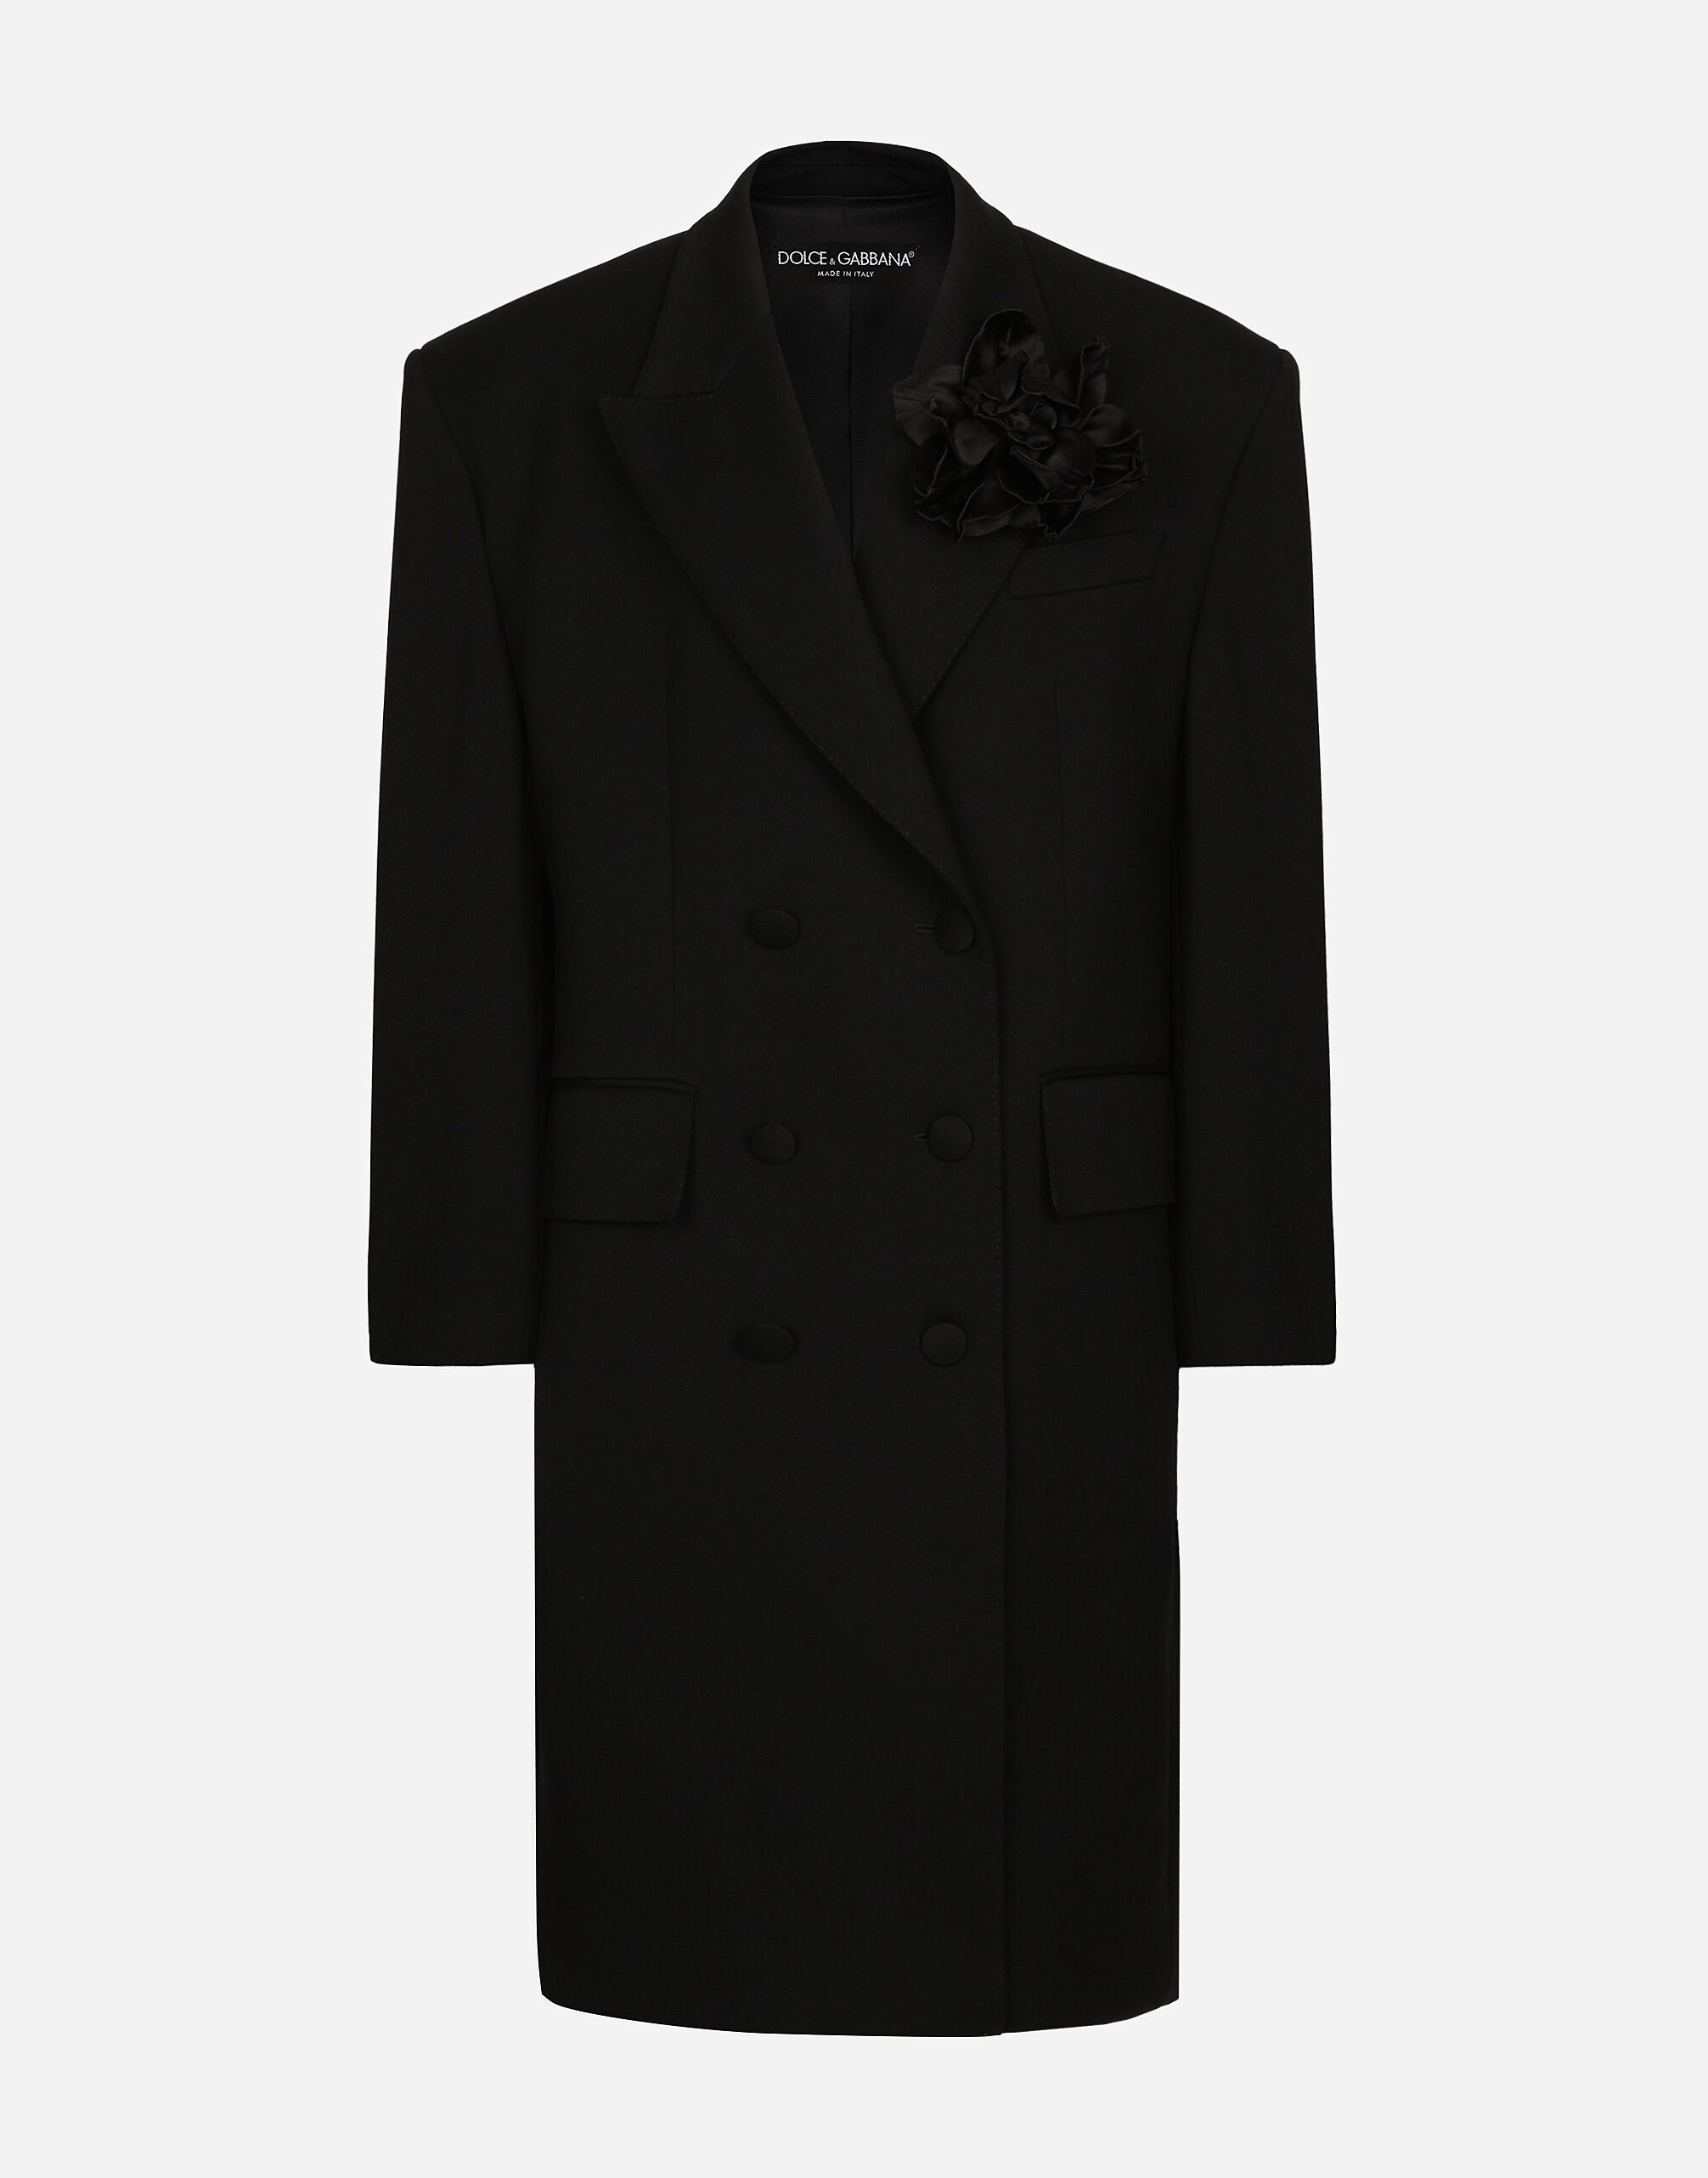 Dolce & Gabbana ダブルブレストコート オーバーサイズ ウールクレープ ブラック F0D1OTFUMG9